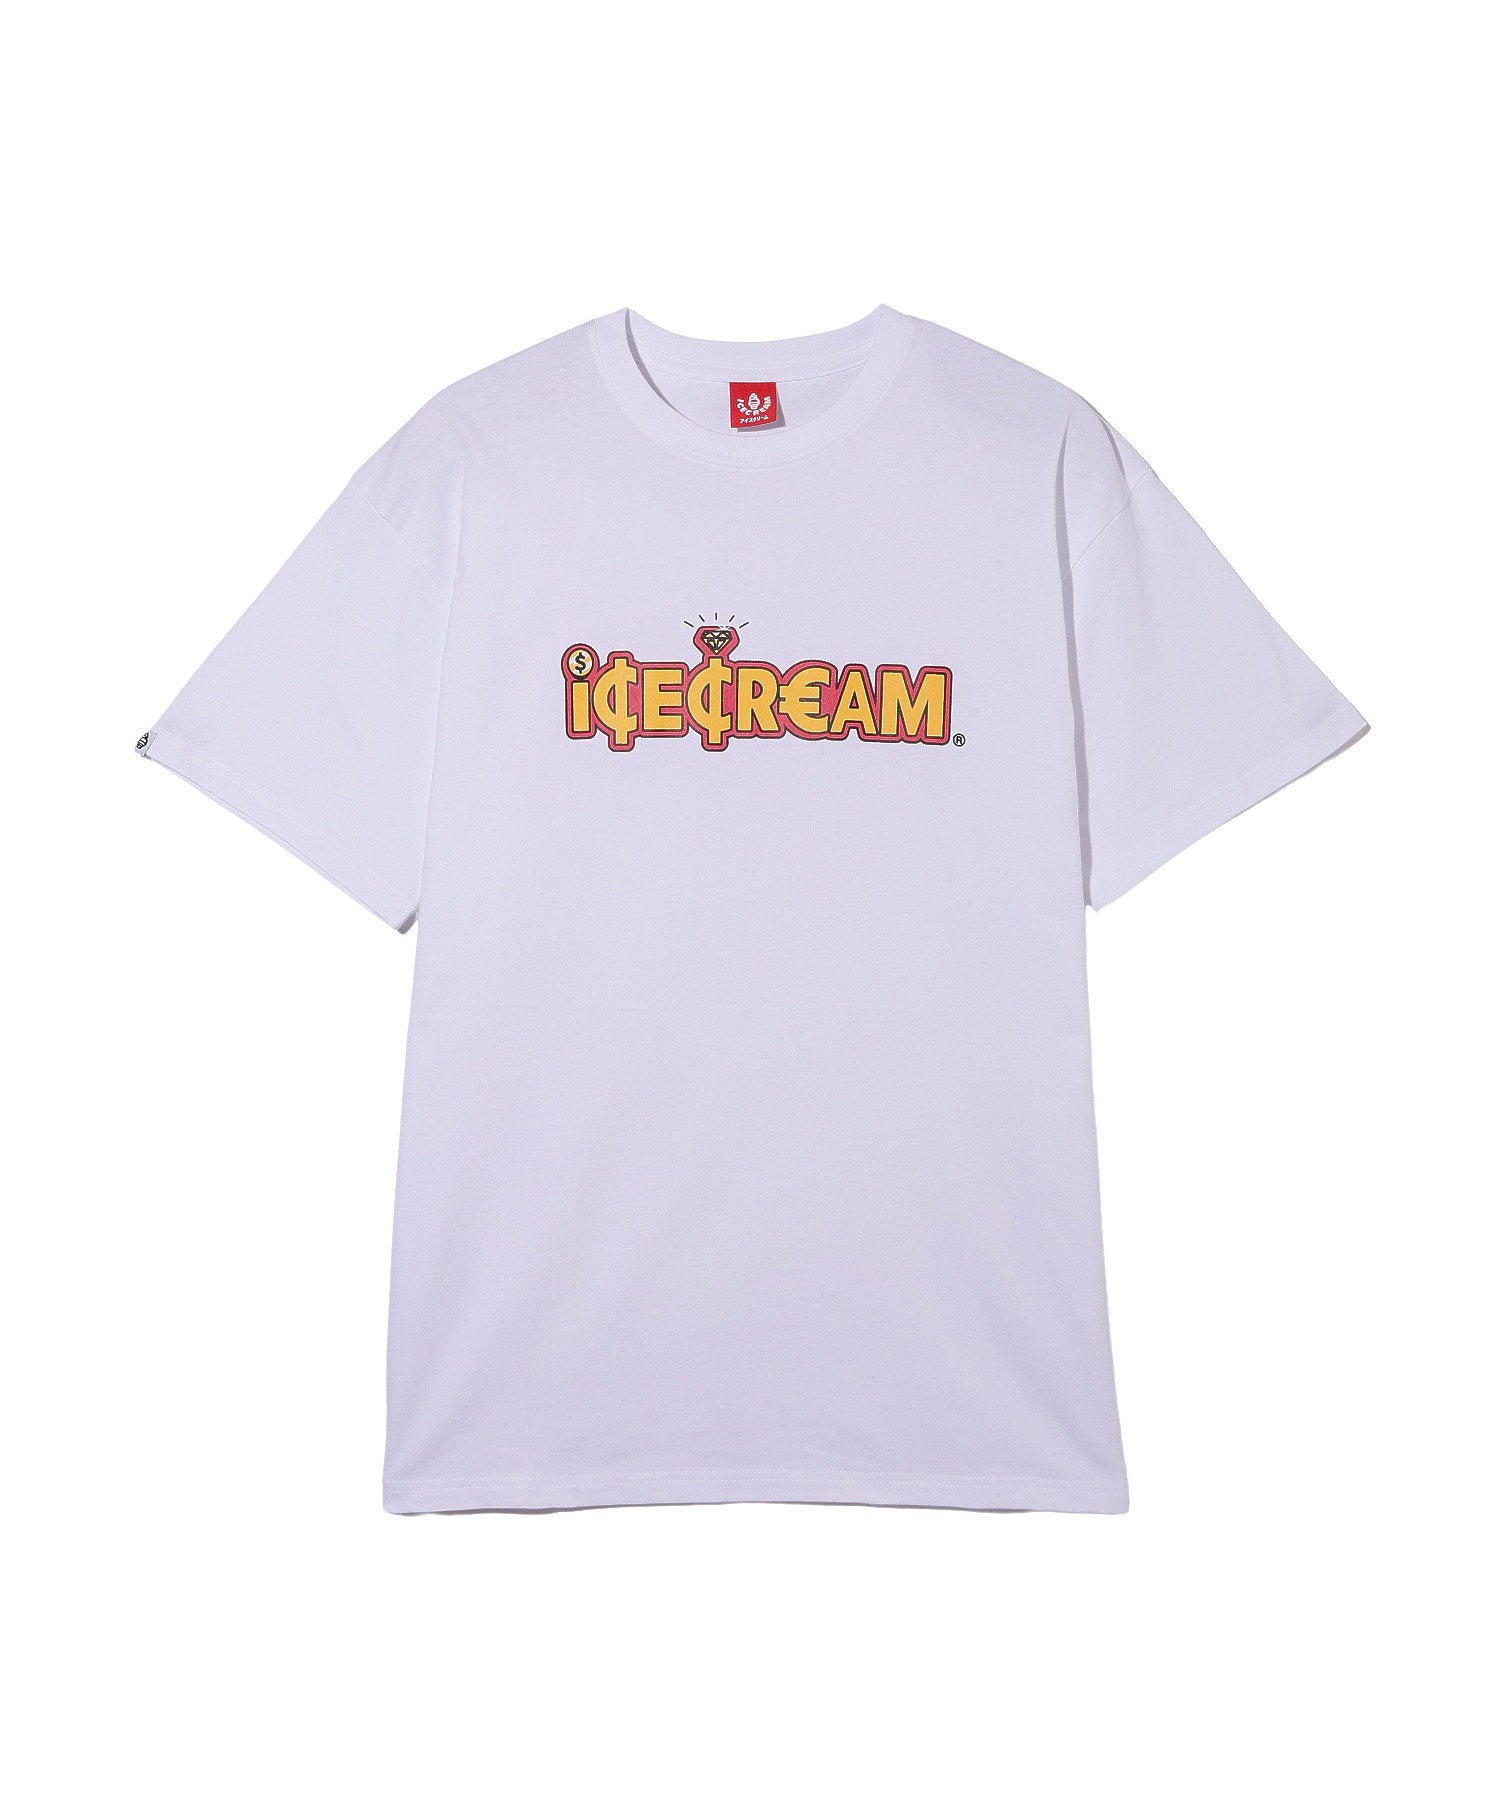 ICECREAM/アイスクリーム/WORD T-SHIRT/441-1209